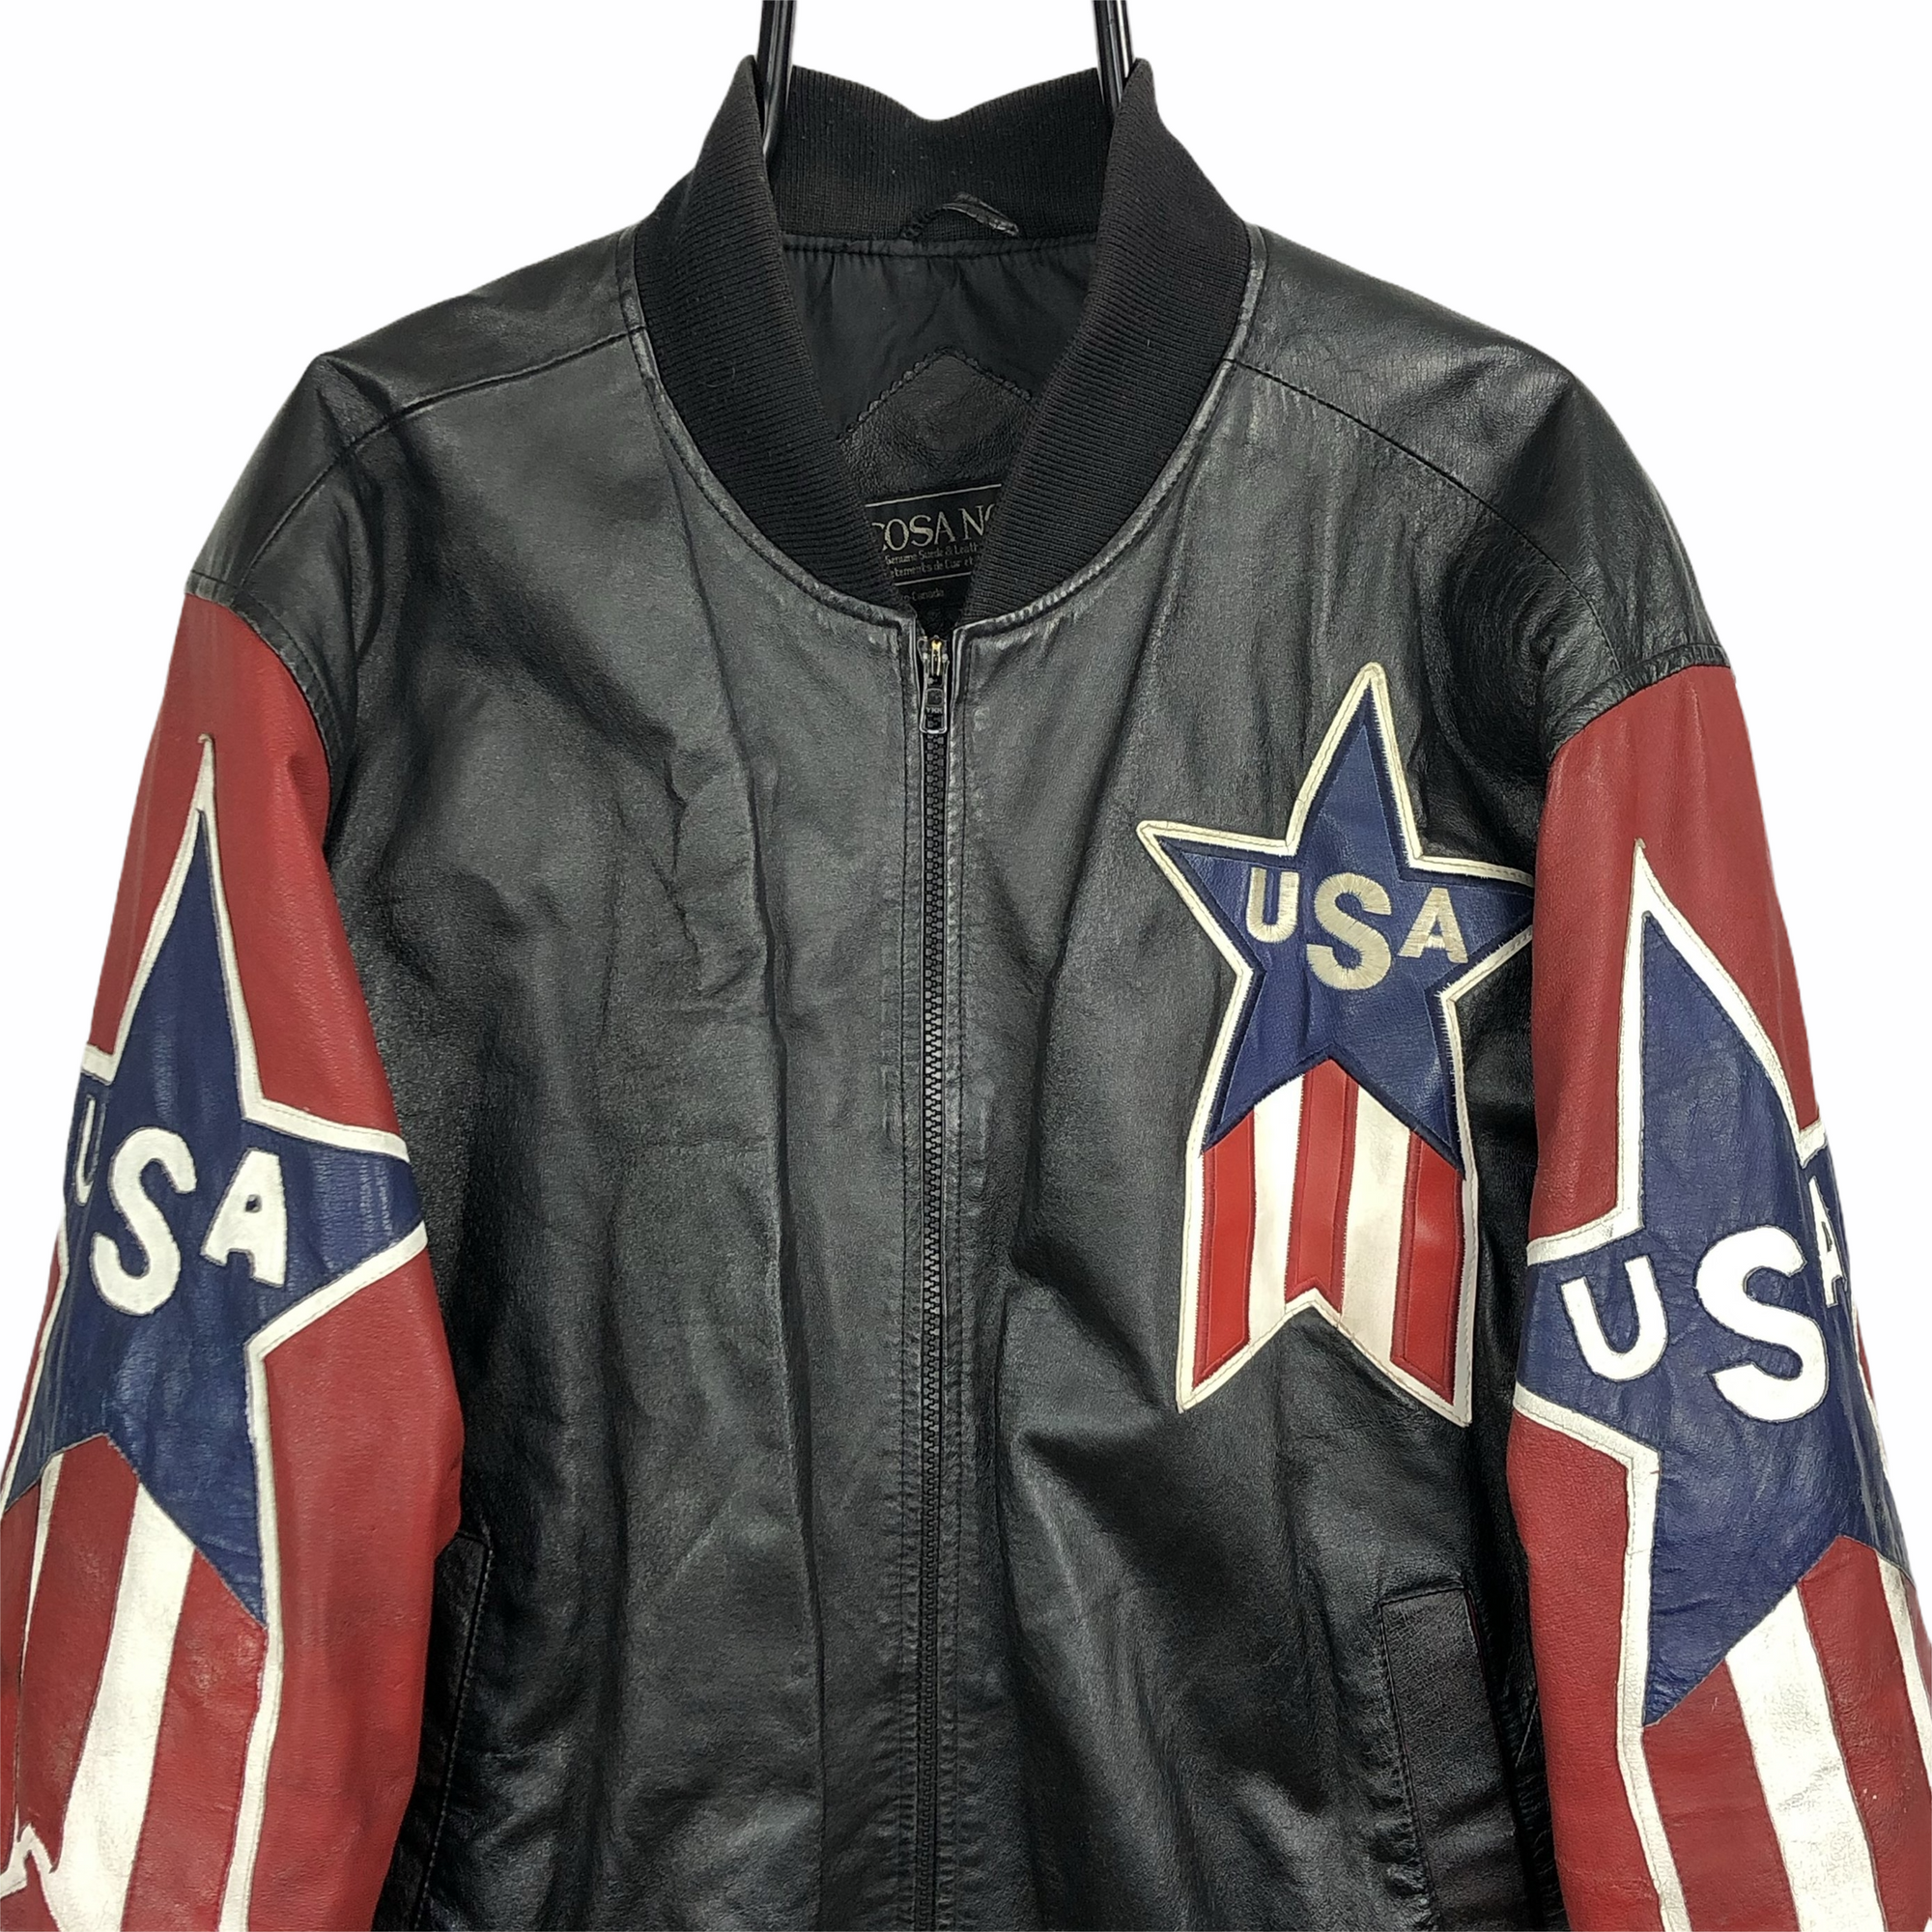 Vintage Cosa Nova ‘USA’ Leather Jacket - Men’s Large/Women’s XL